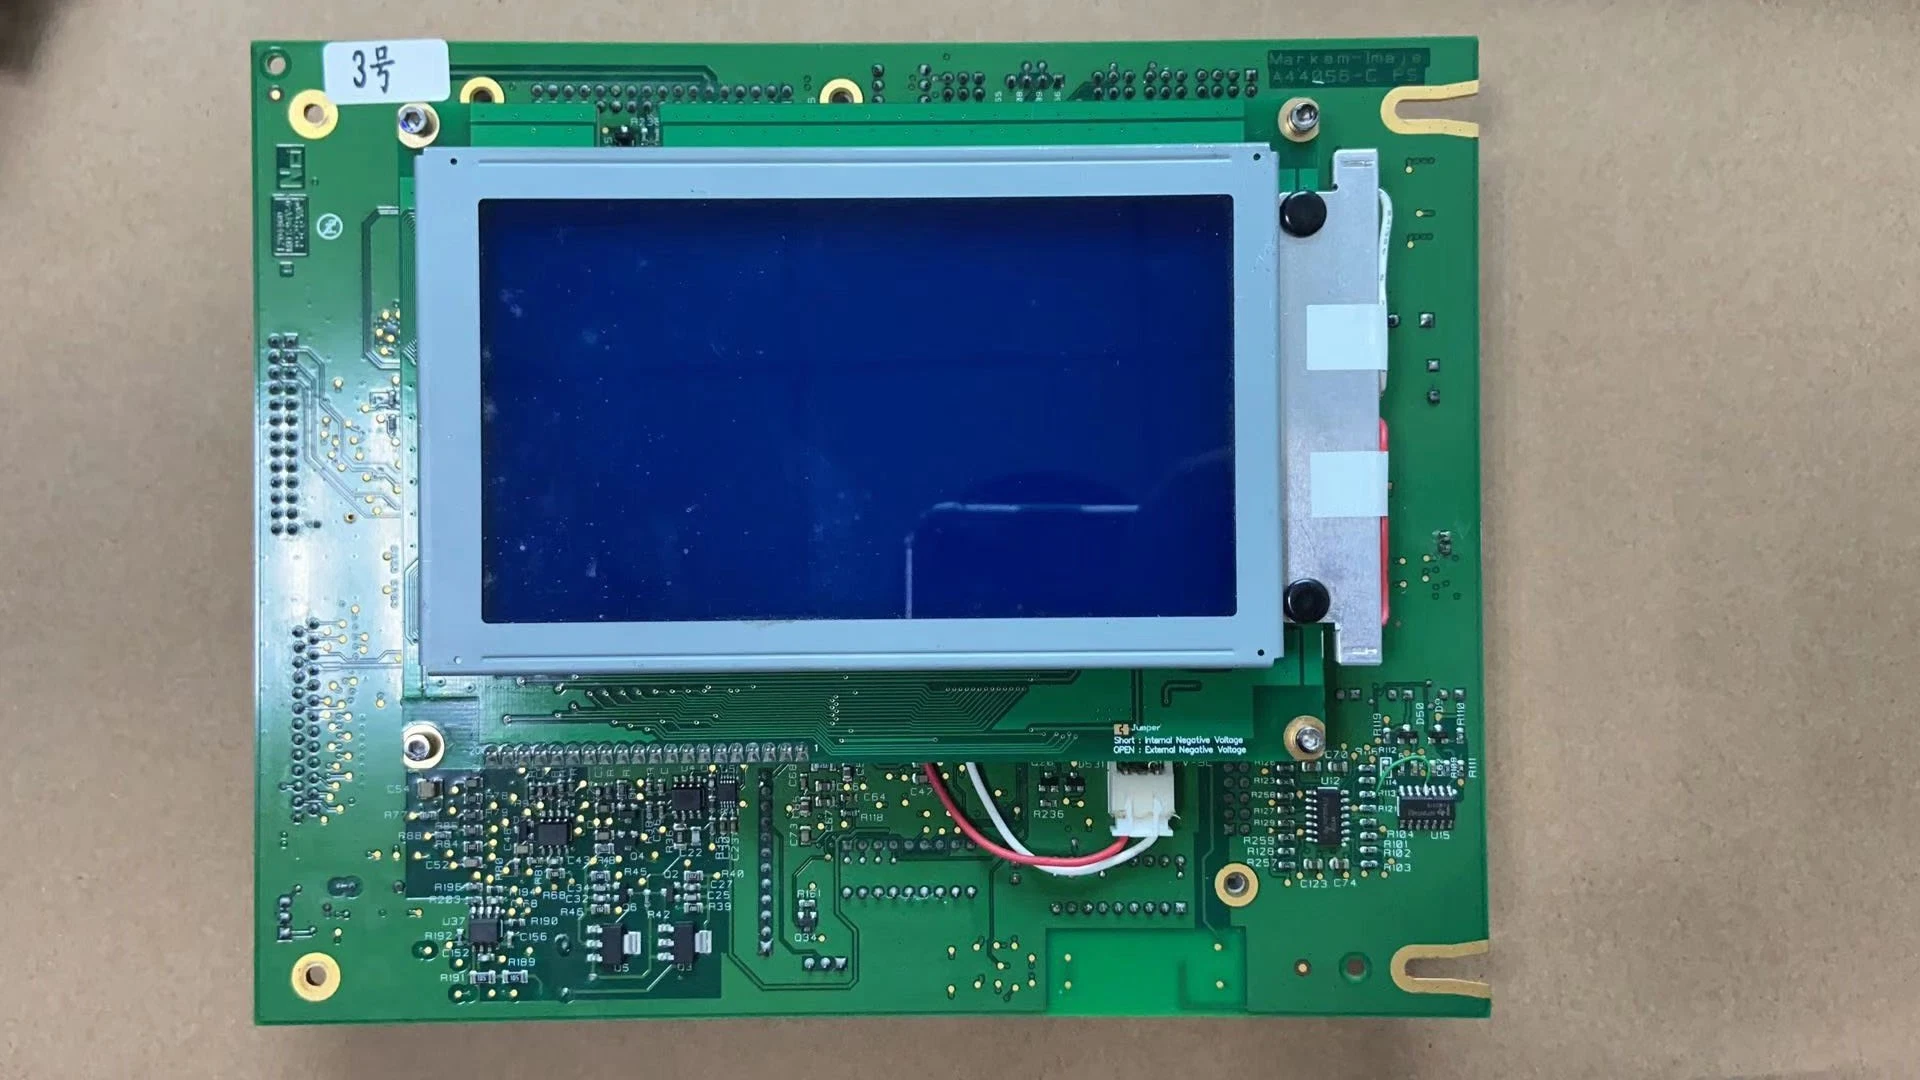 Original Used Enm46502 Main Board with LCD Screen Spare Parts for Cij Imaje 9232 Printer